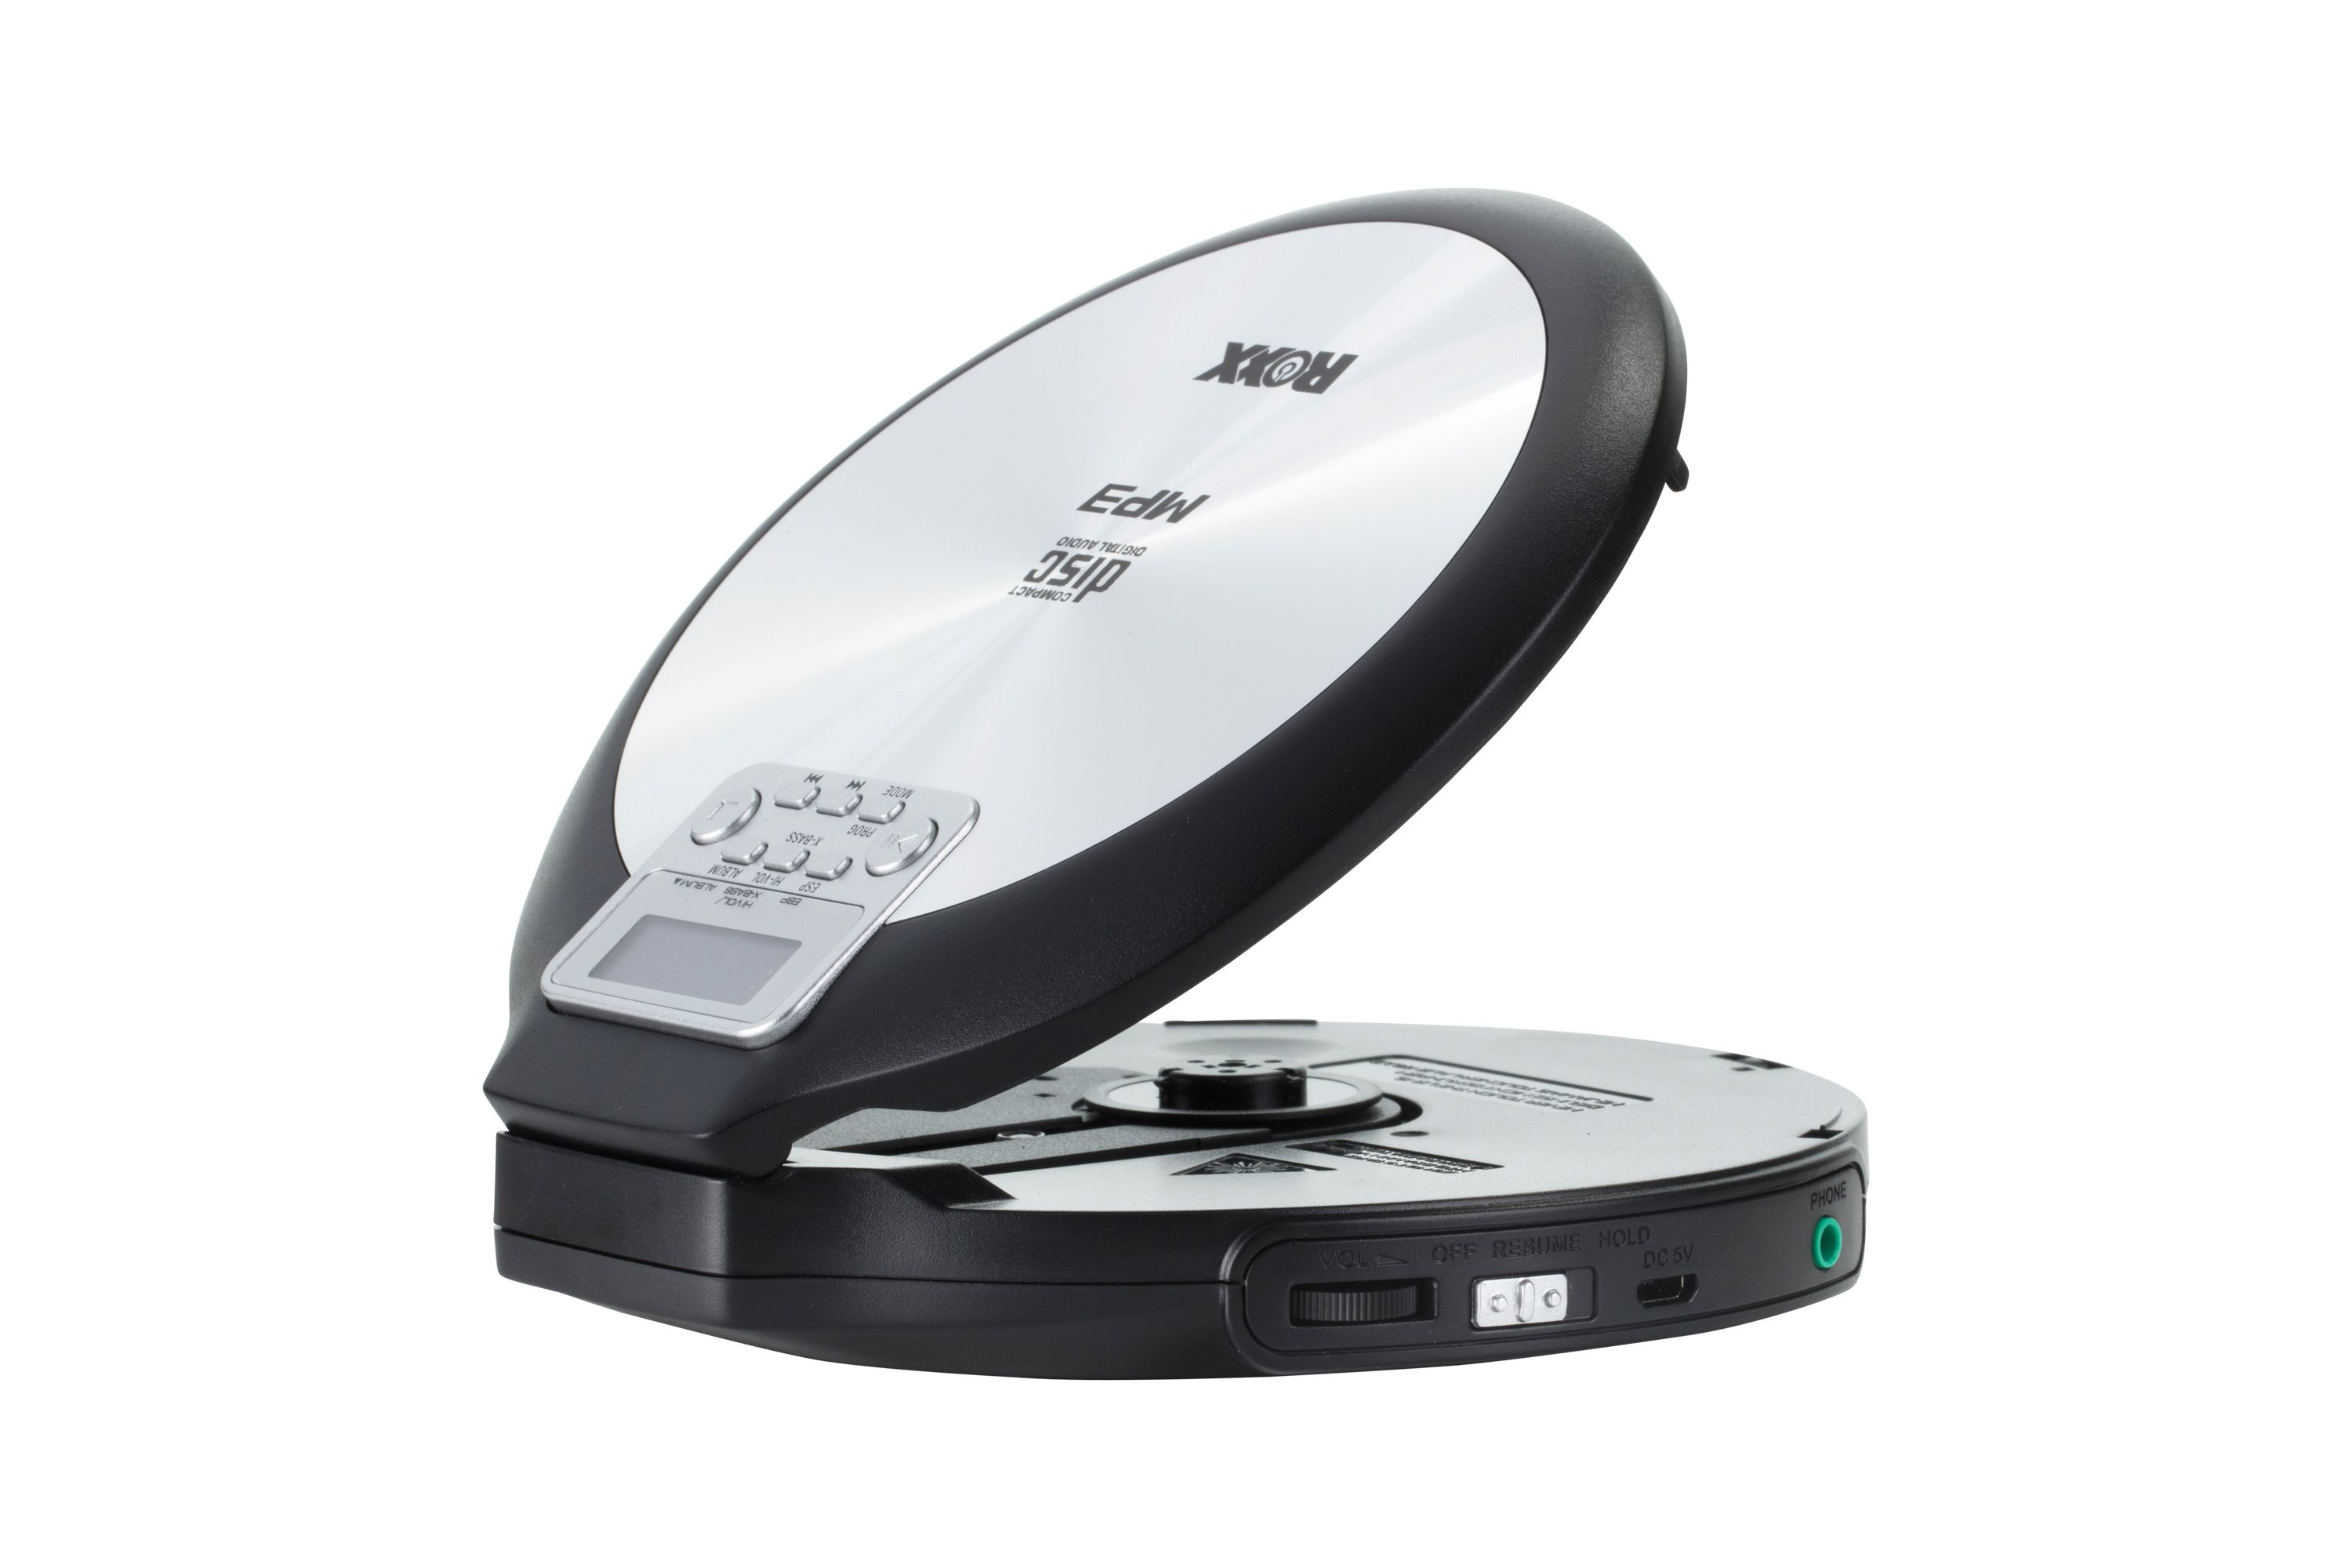 ROXX PCD 600 Tragbarer silber-schwarz CD-Player